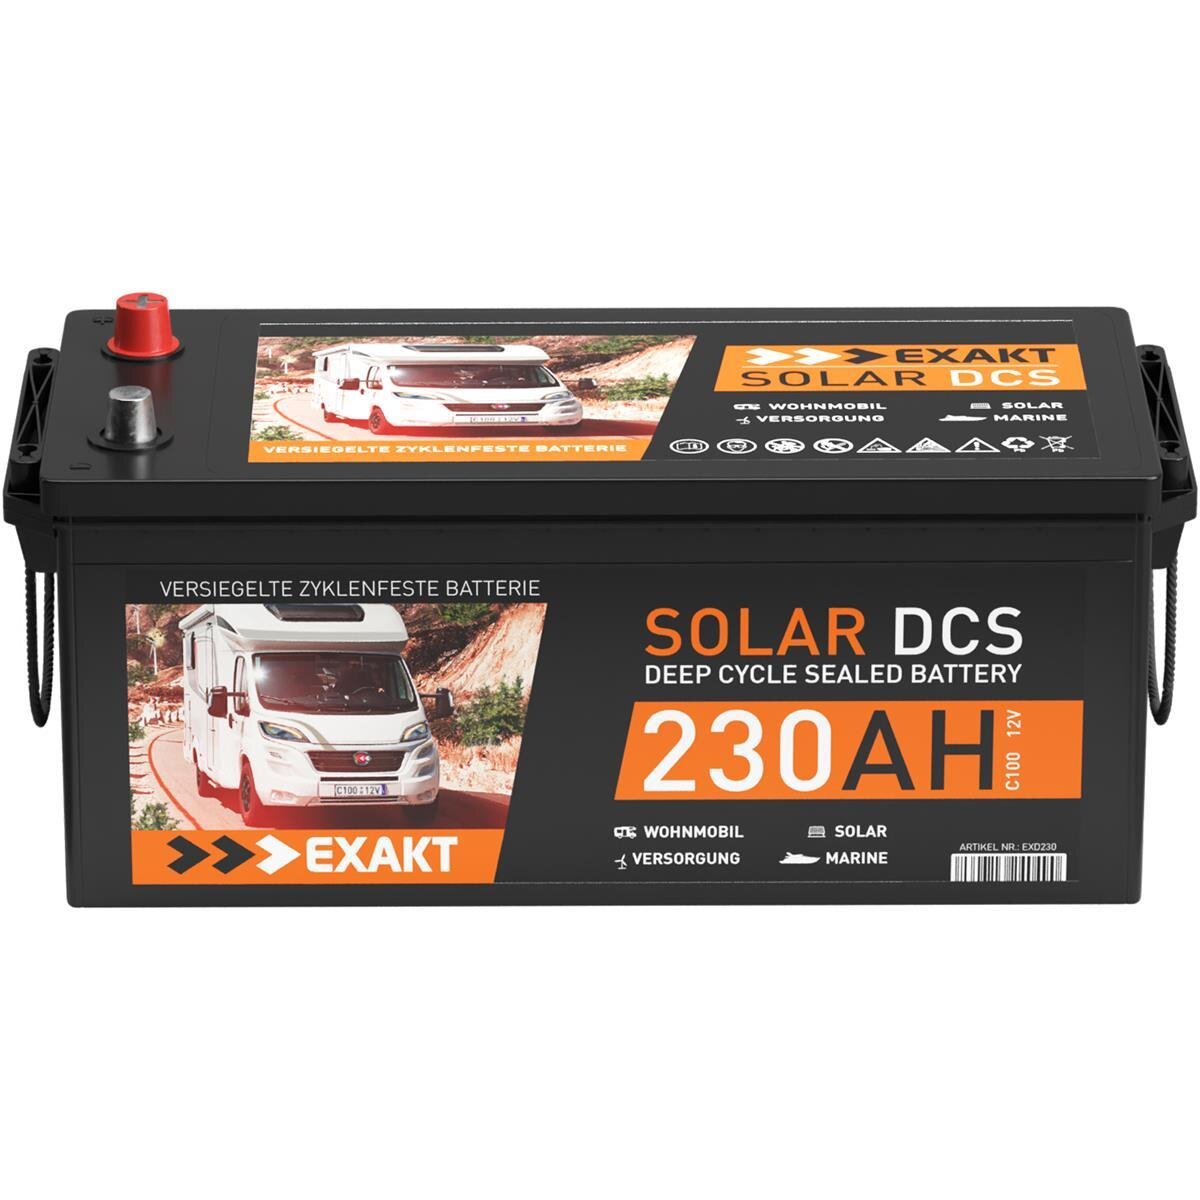 https://www.autobatterien24.com/media/image/product/6165/lg/exakt-solar-dcs-solarbatterie-230ah-12v.jpg